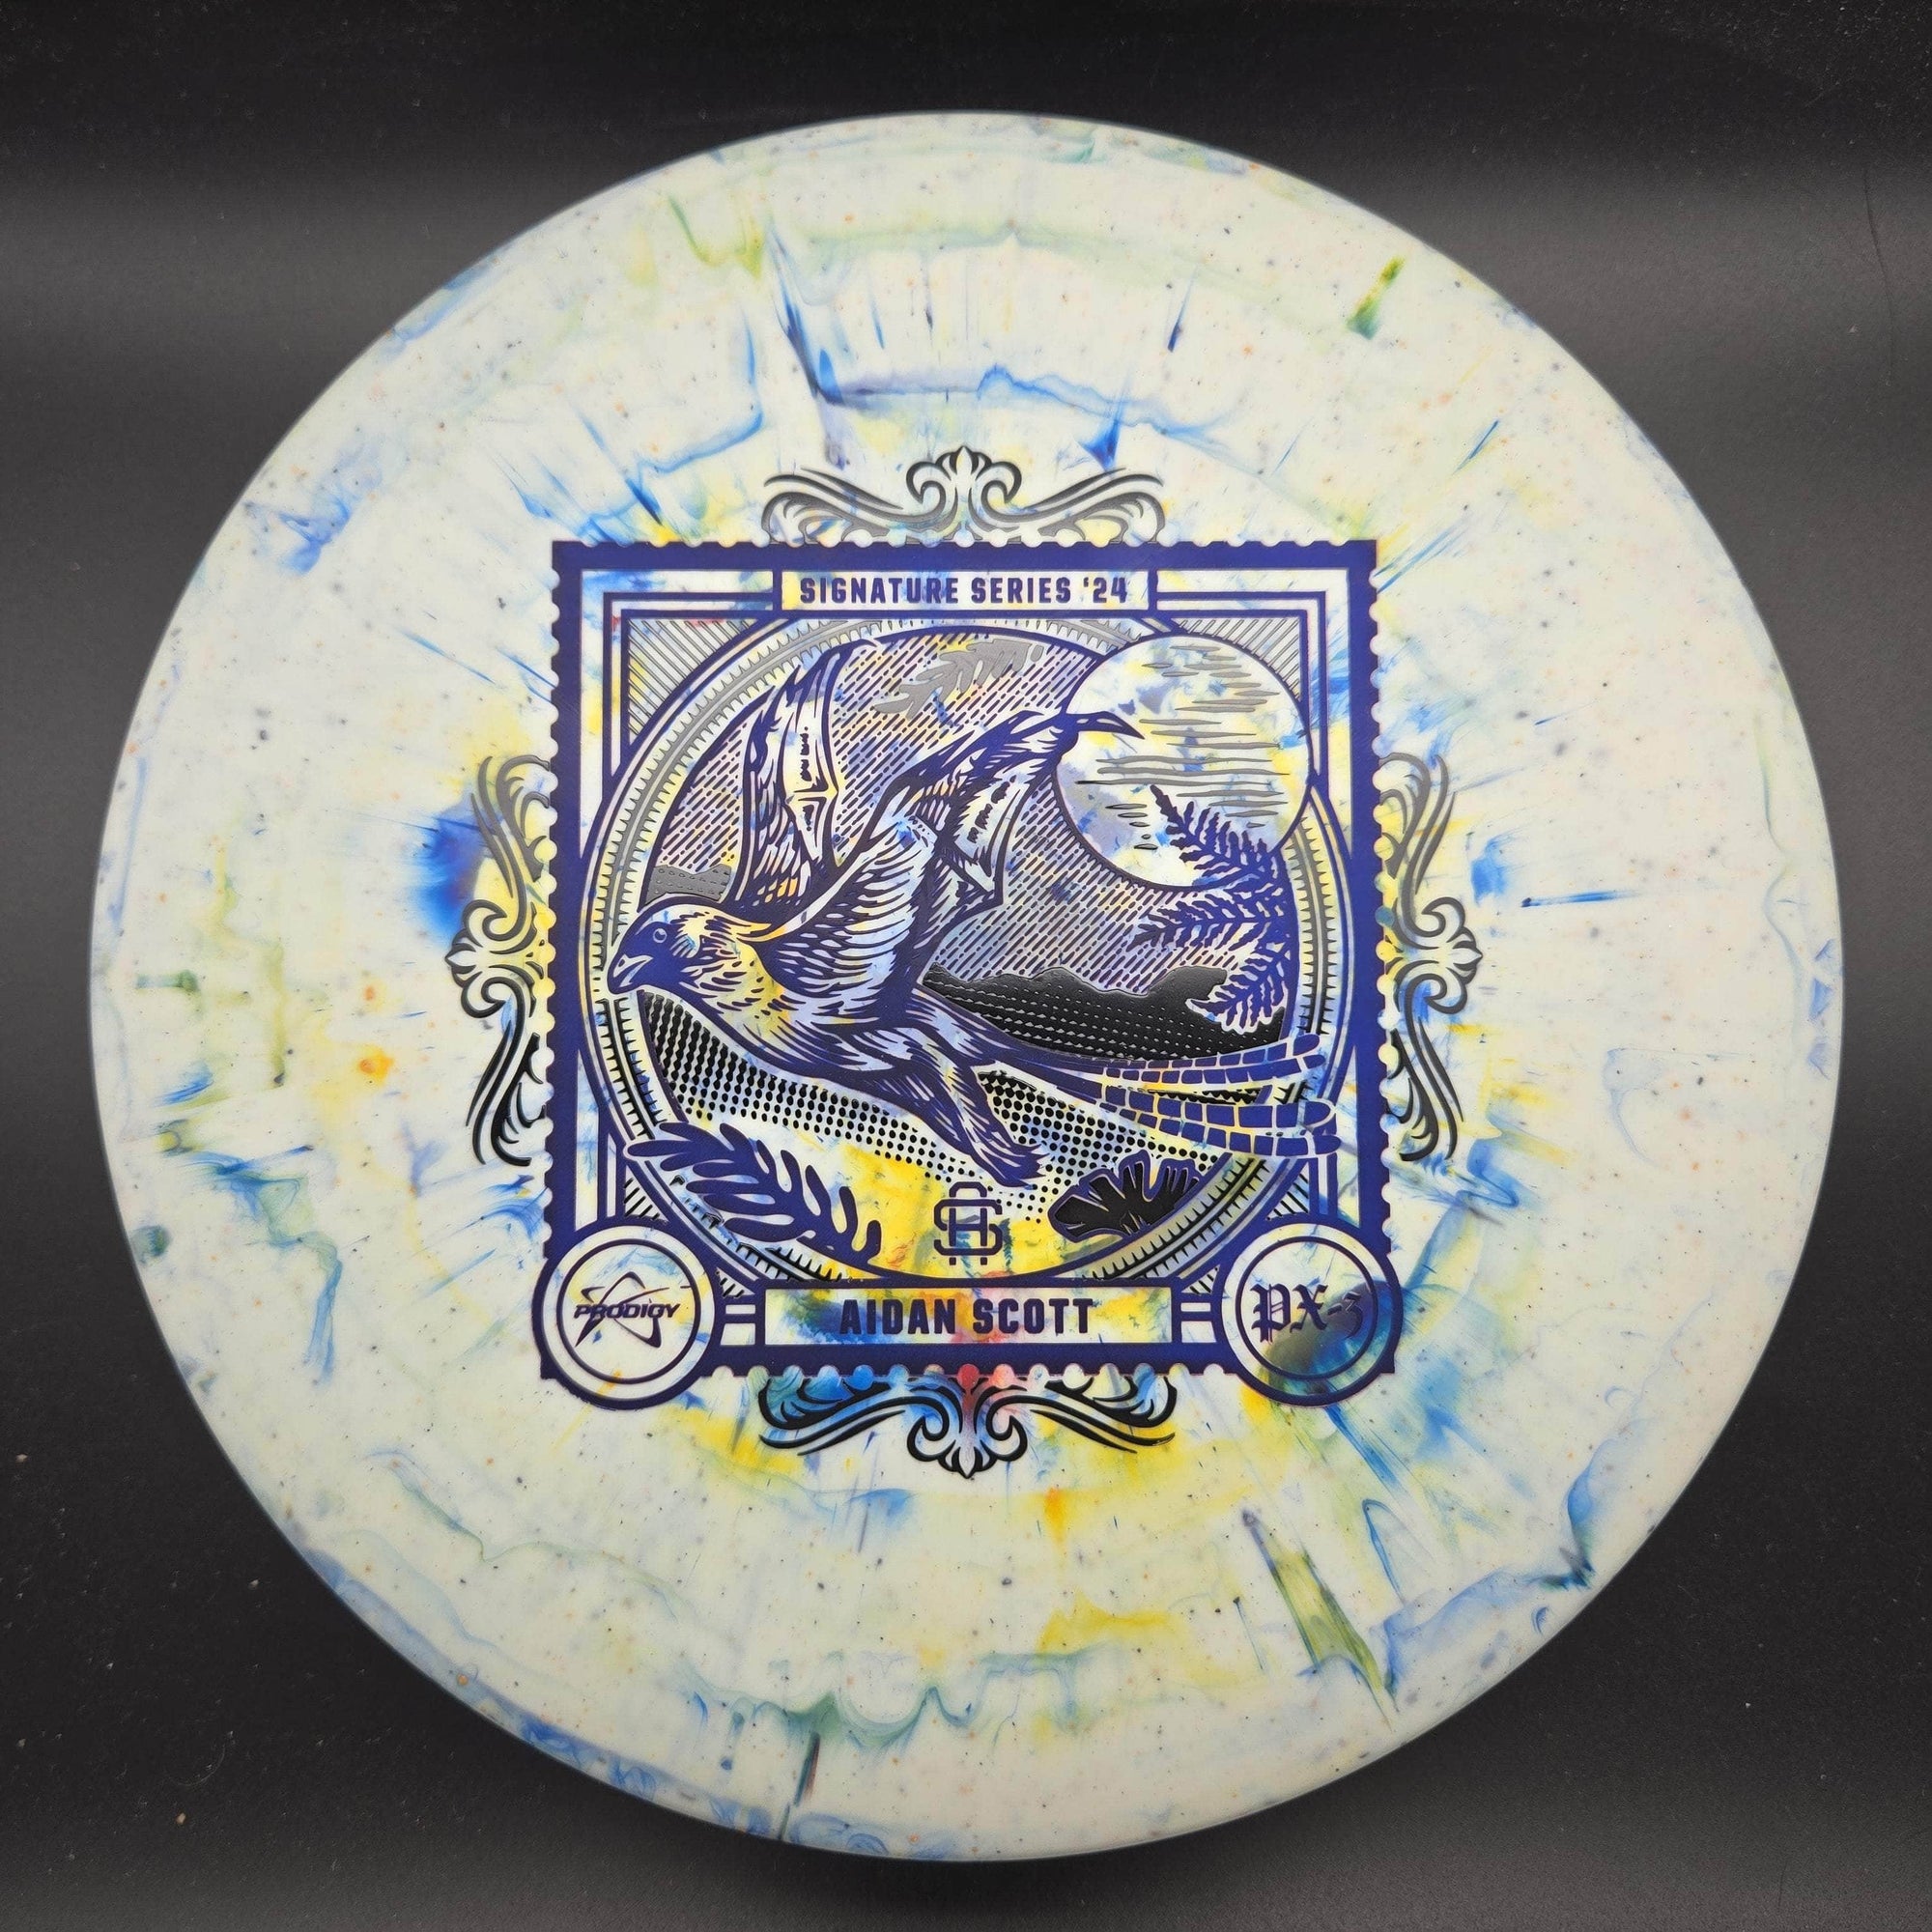 Prodigy Putter Fractal Blue Stamp 173g PX3, 300 Fractal, Aidan Scott 2024 Signature Series